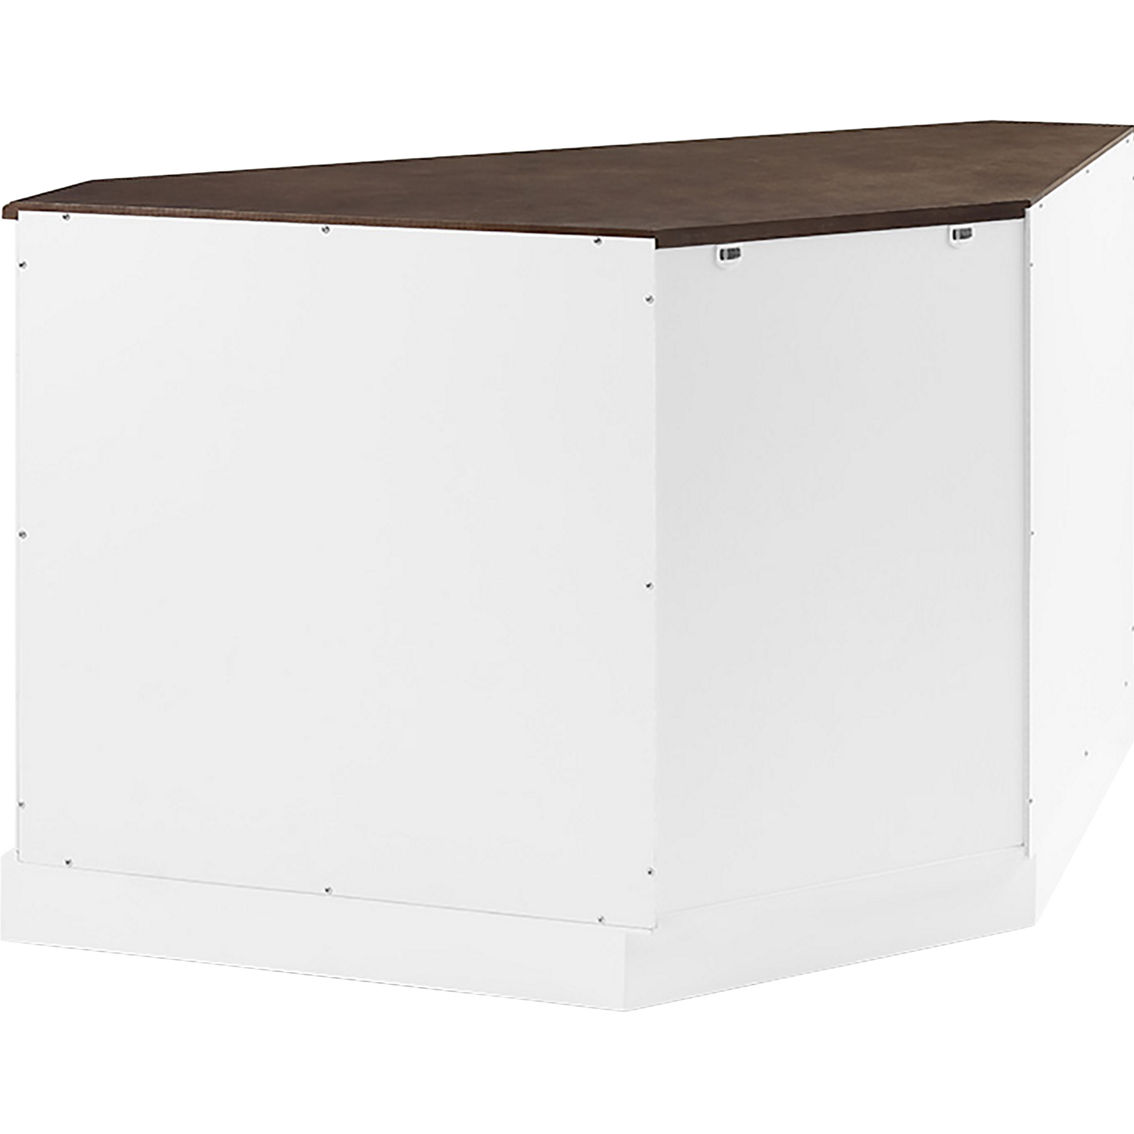 Crosley Furniture Winslow Corner Credenza Dog Crate, White - Image 3 of 6